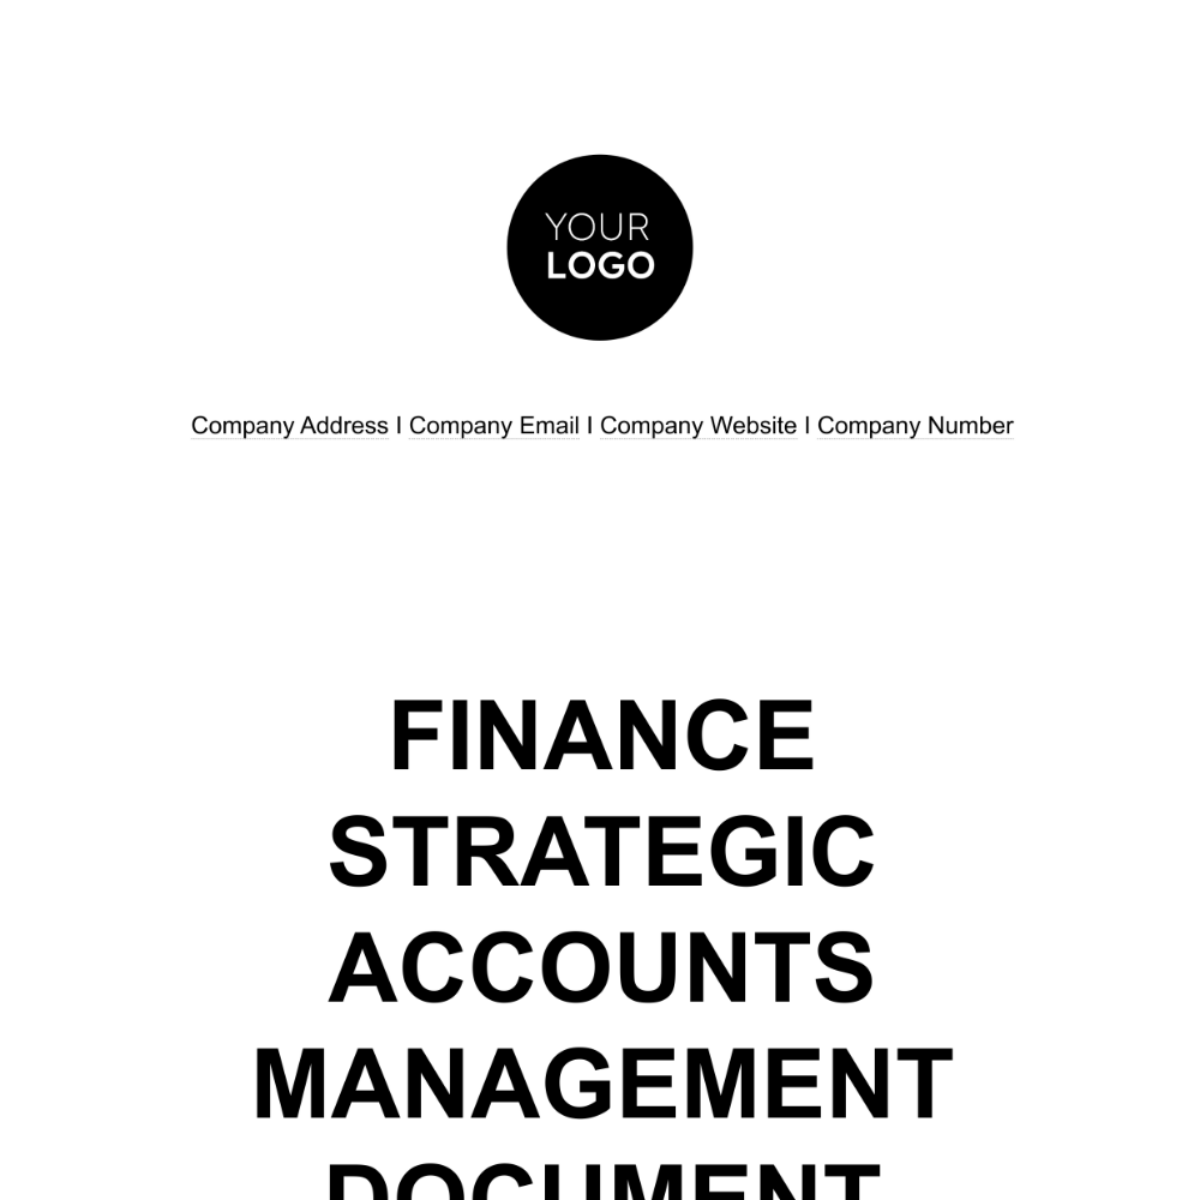 Free Finance Strategic Accounts Management Document Template